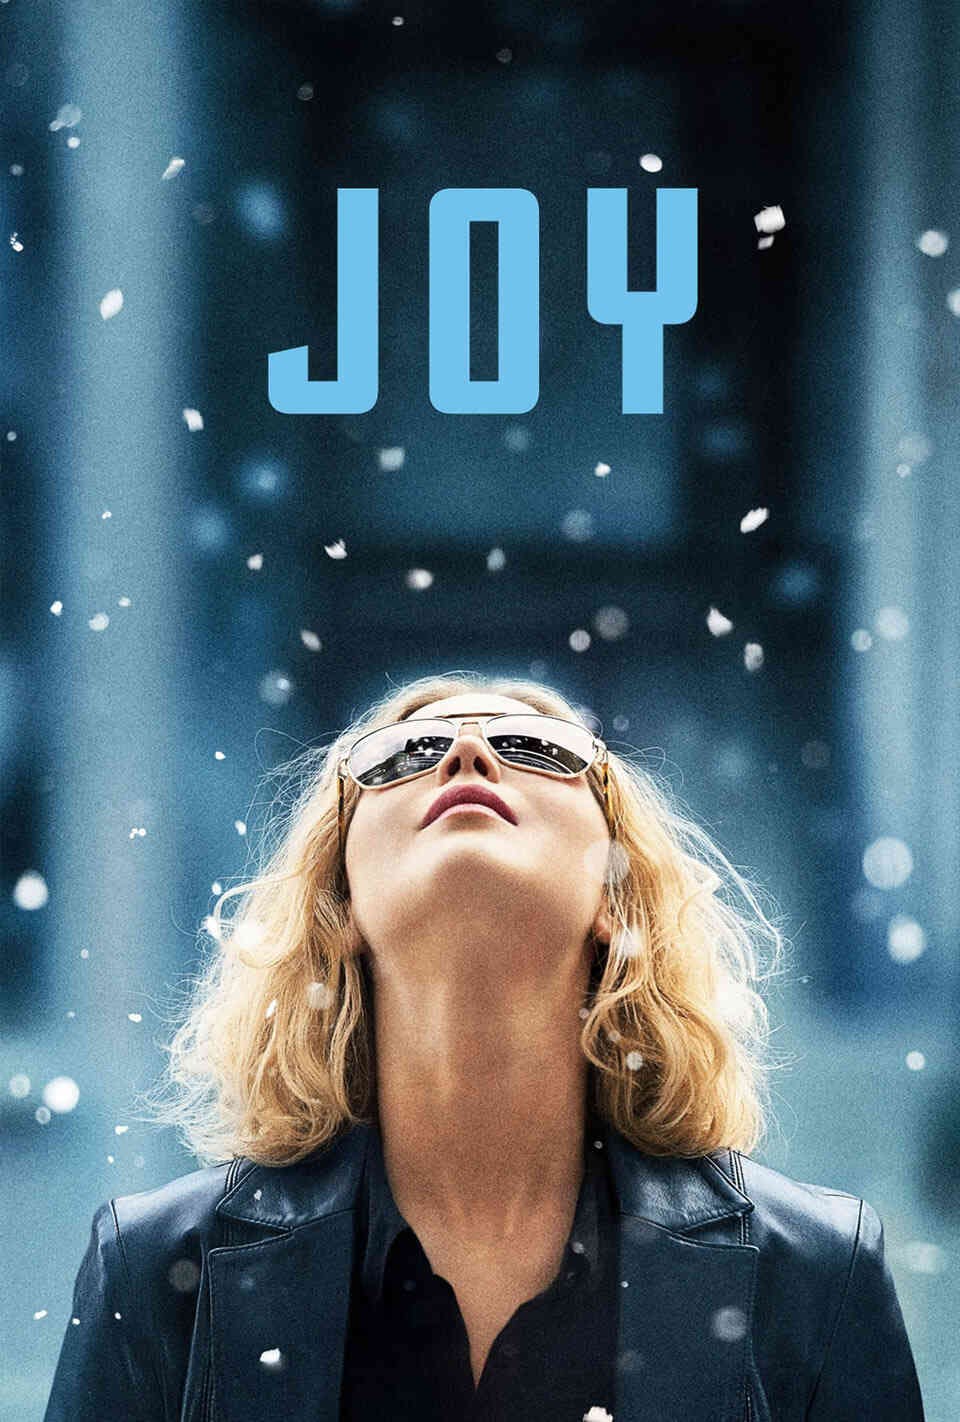 Read Joy screenplay (poster)